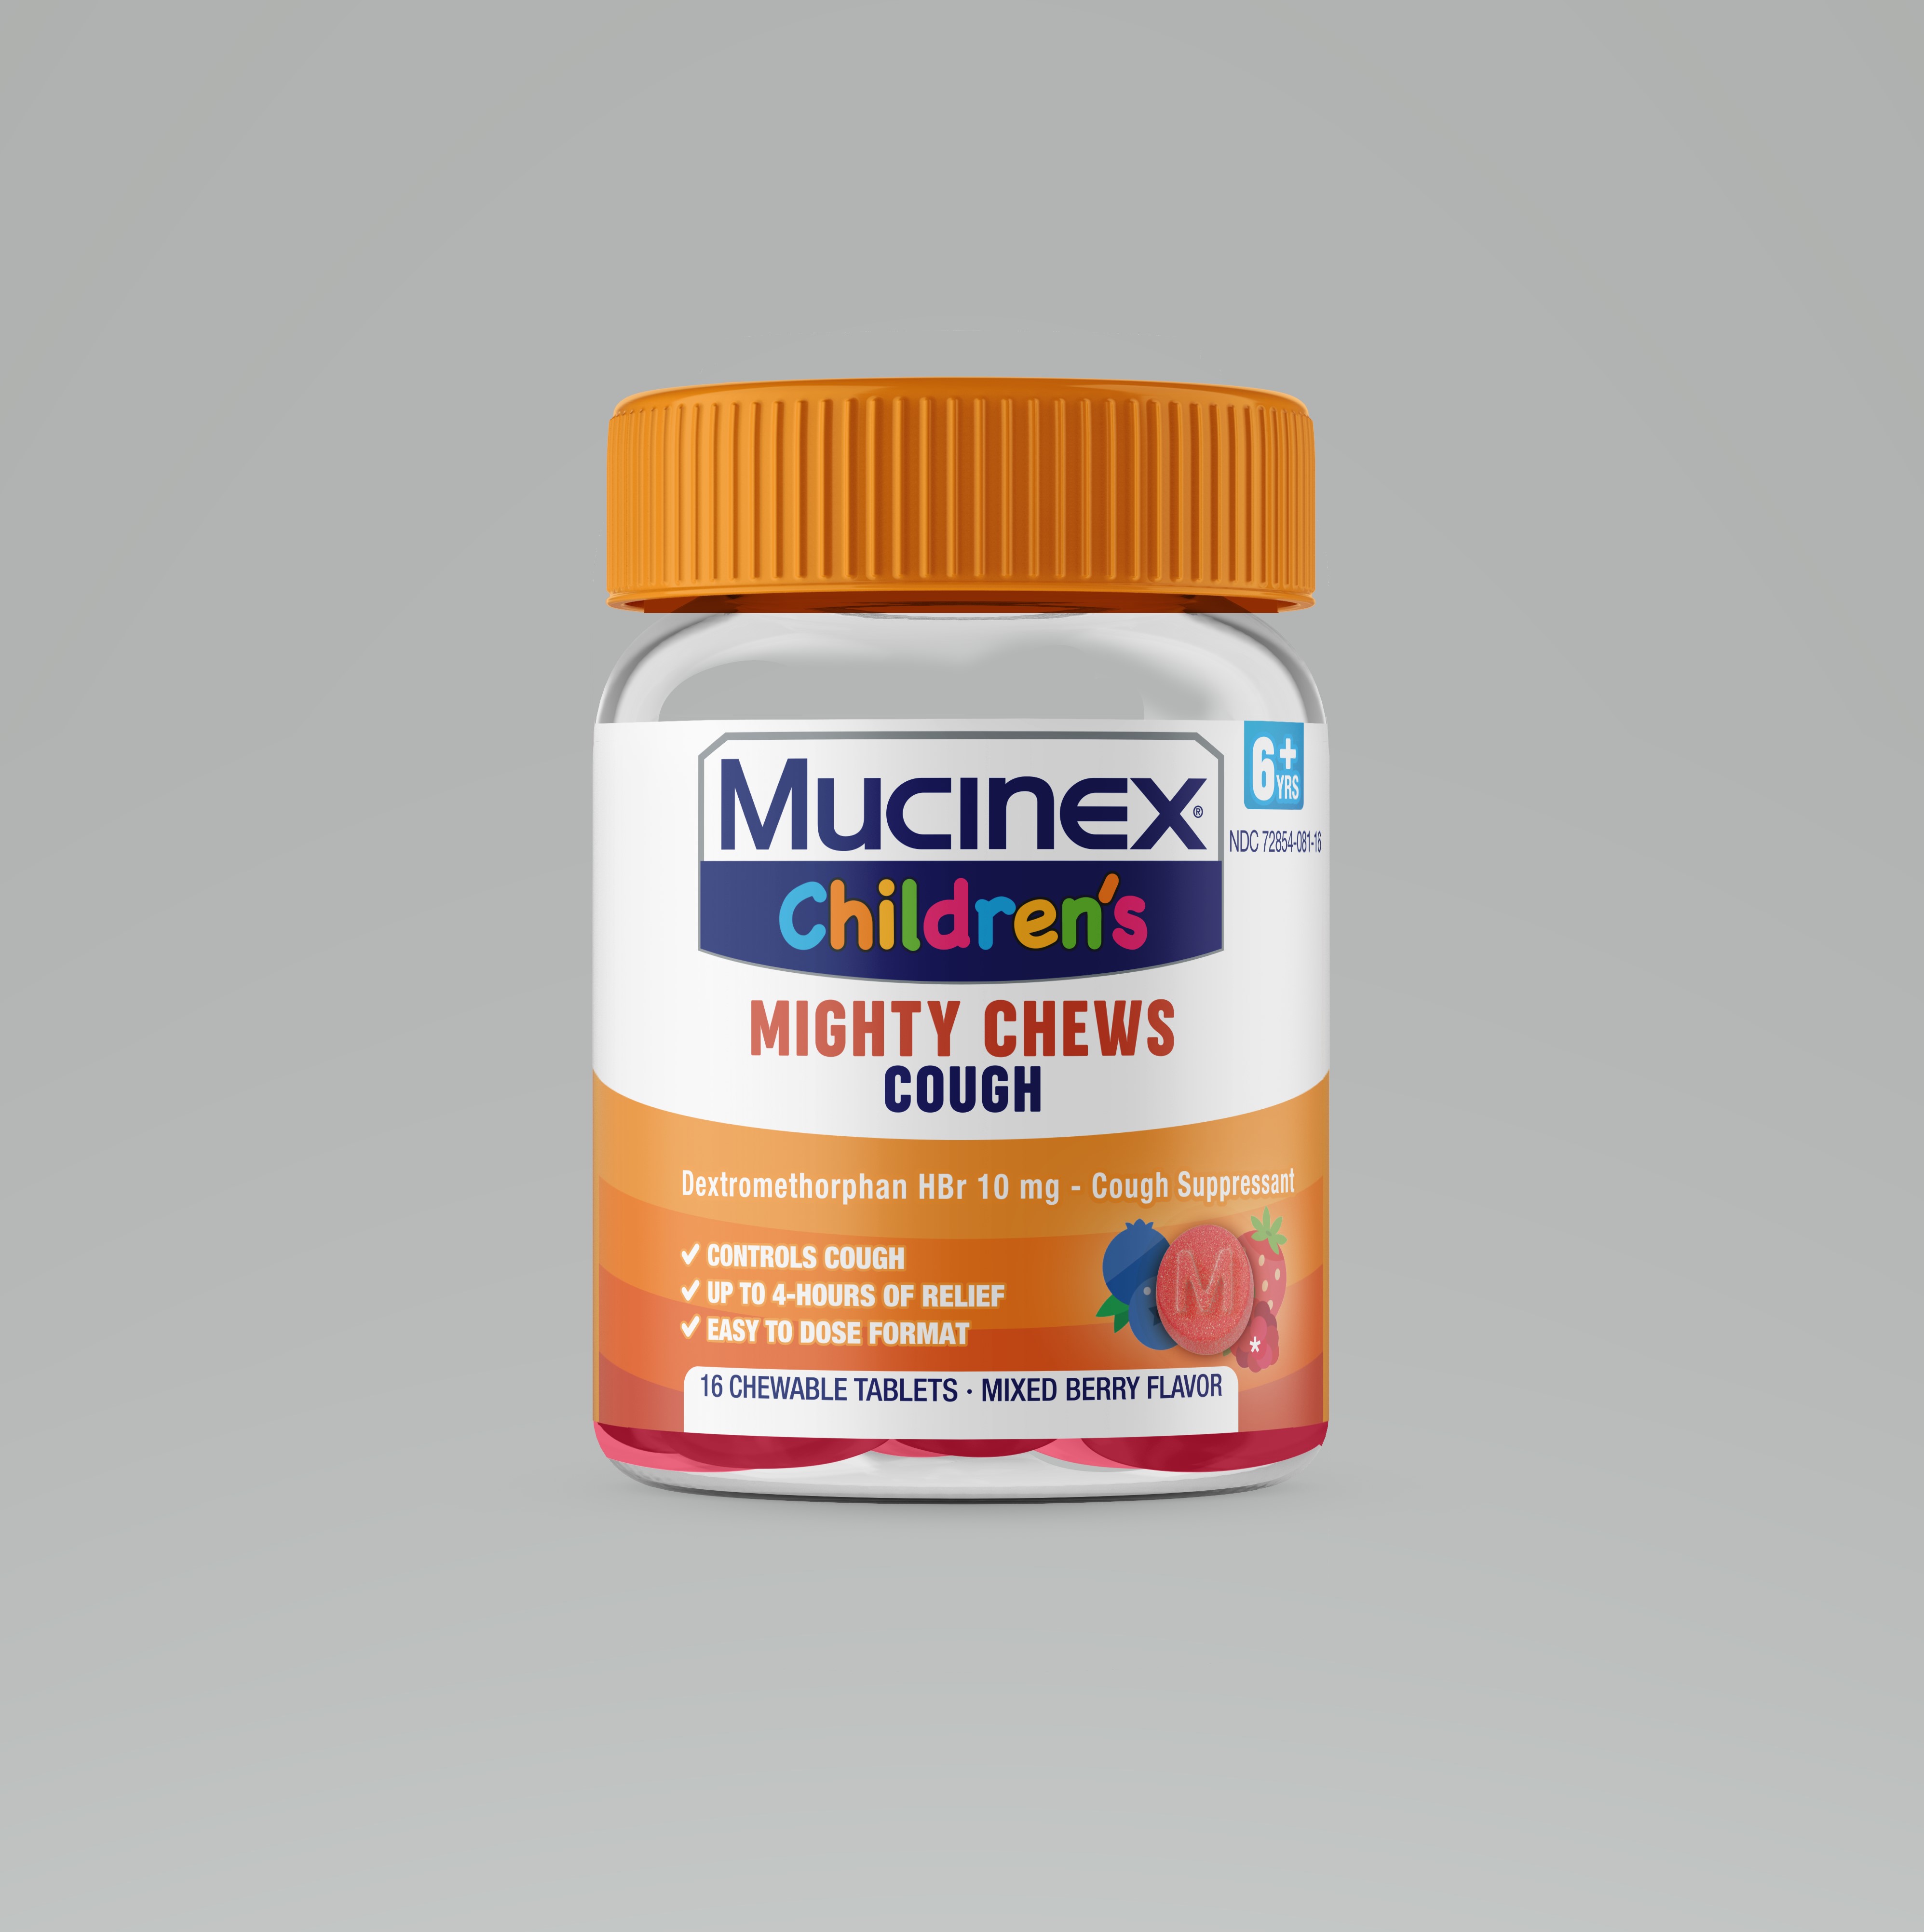 MUCINEX® Children's Mighty Chews - Cough - Mixed Berry Flavor